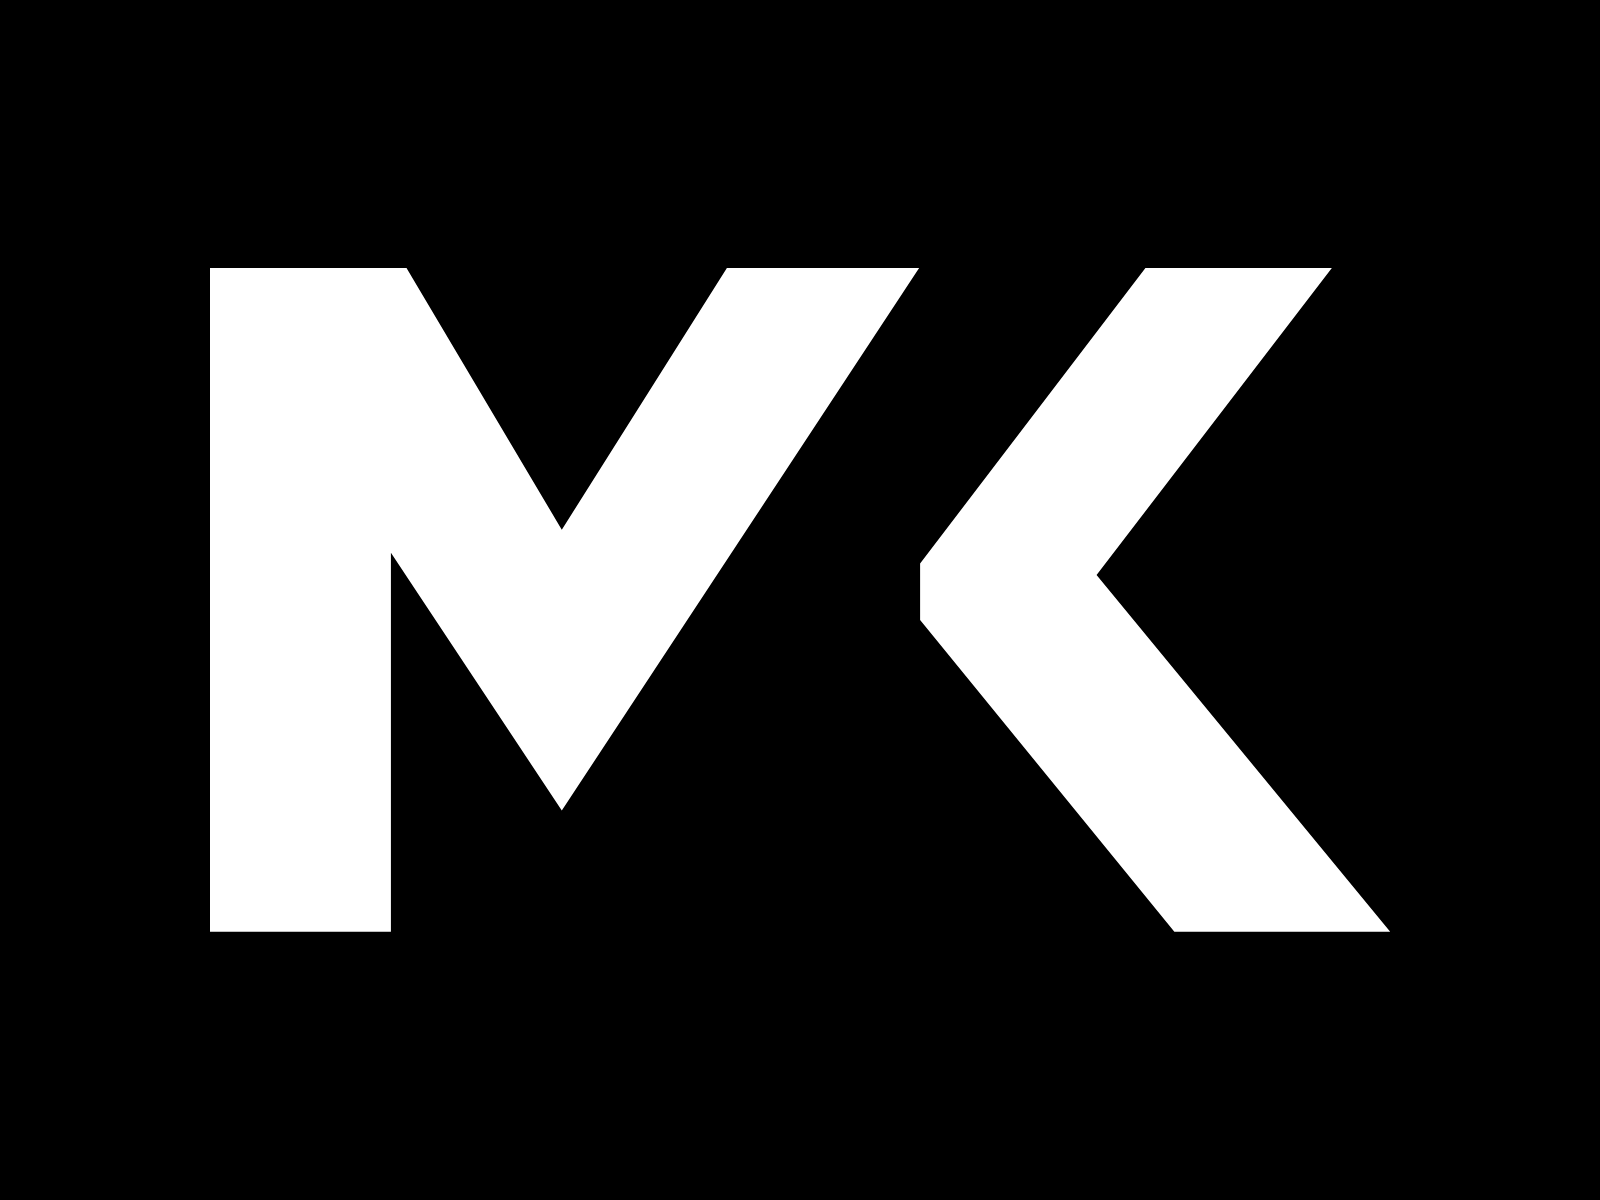 MK Logo Design by Maninder Kaur on Dribbble